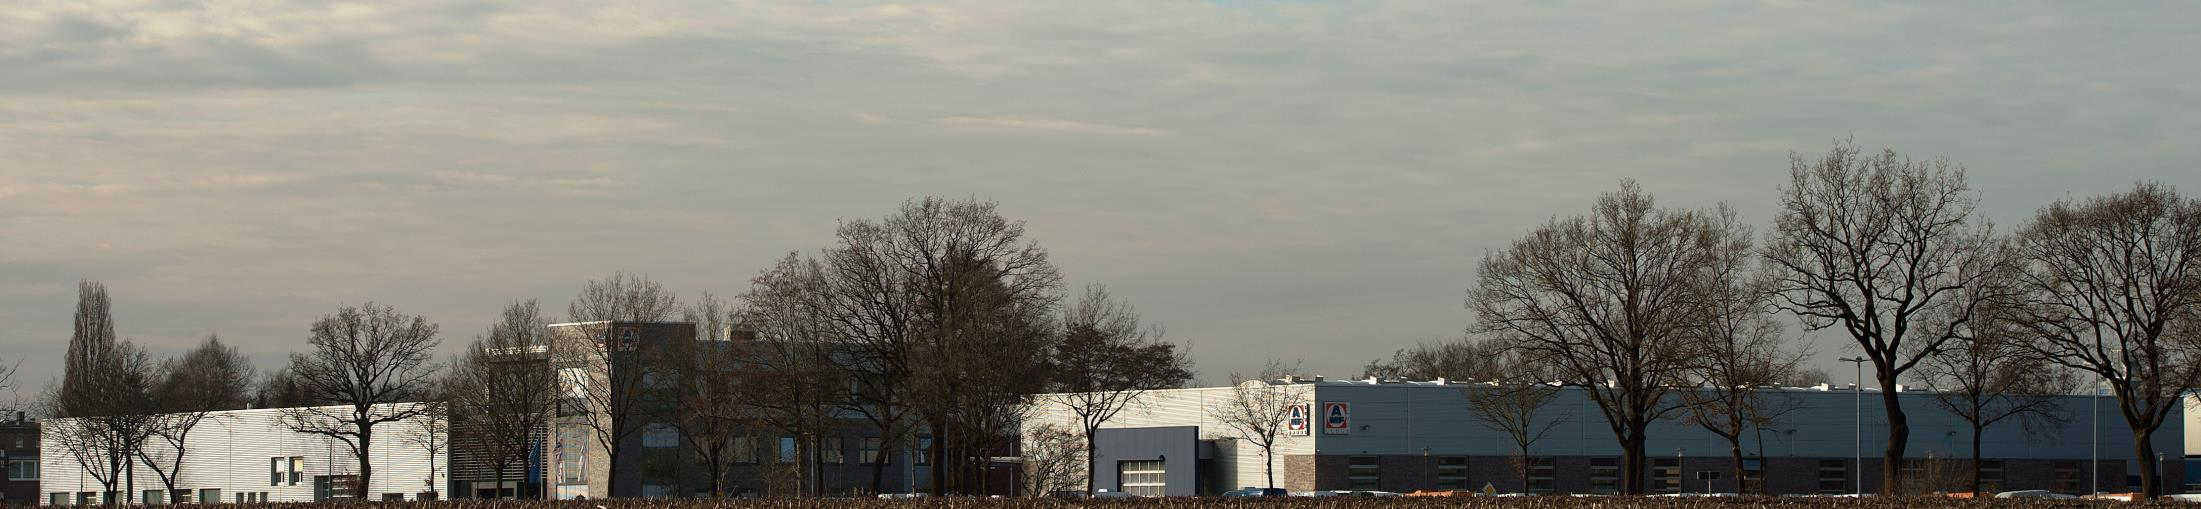 AMF-Bruns GmbH & Co.